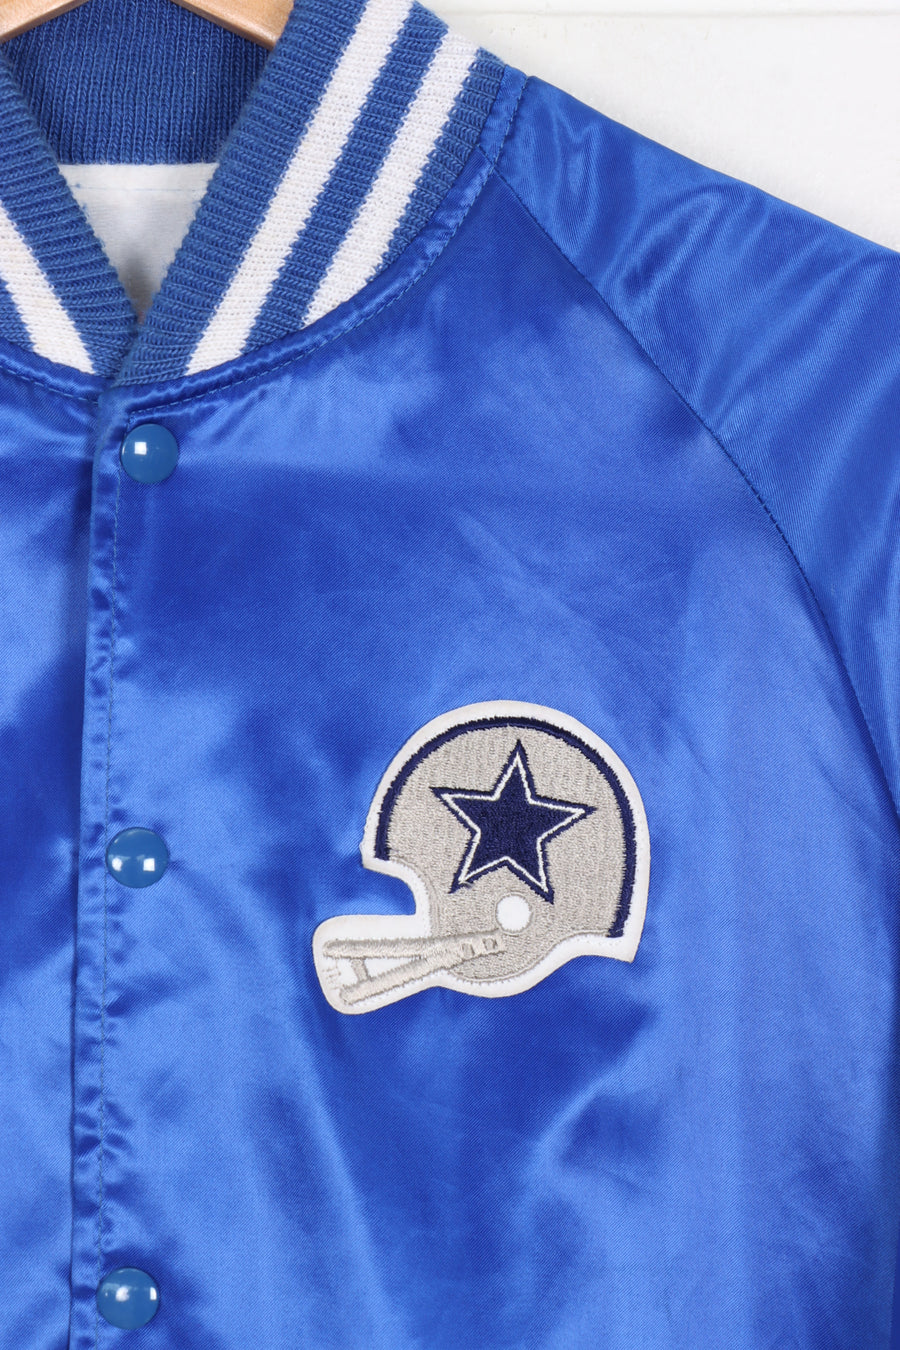 Dallas Cowboys Royal Blue NFL Football Jacket USA Made (L-XL)